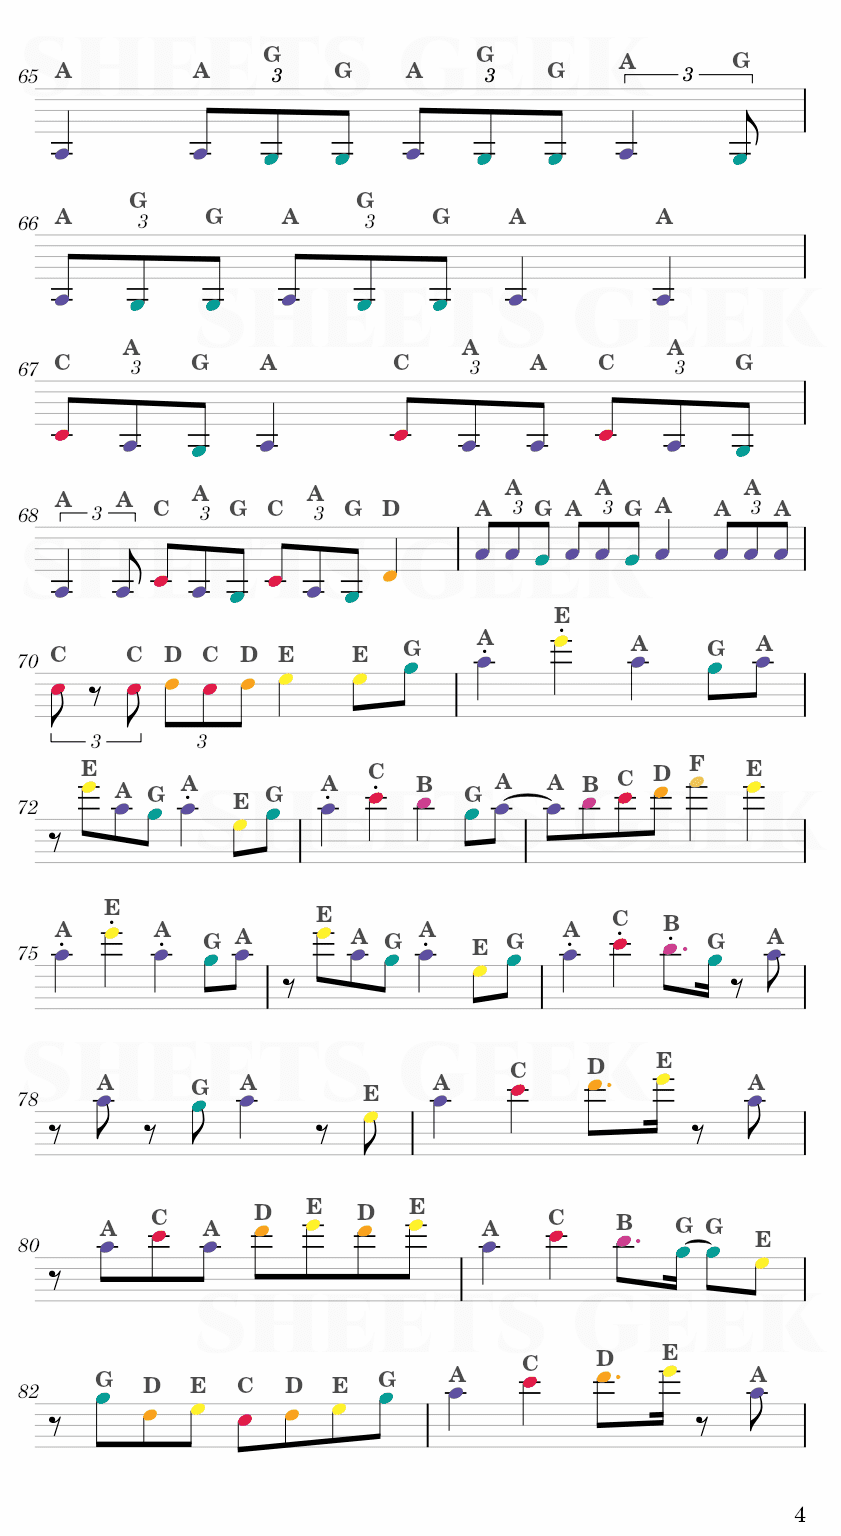 Idol (アイドル) - YOASOBI (Oshi no Ko - Opening) Easy Sheet Music Free for piano, keyboard, flute, violin, sax, cello page 4